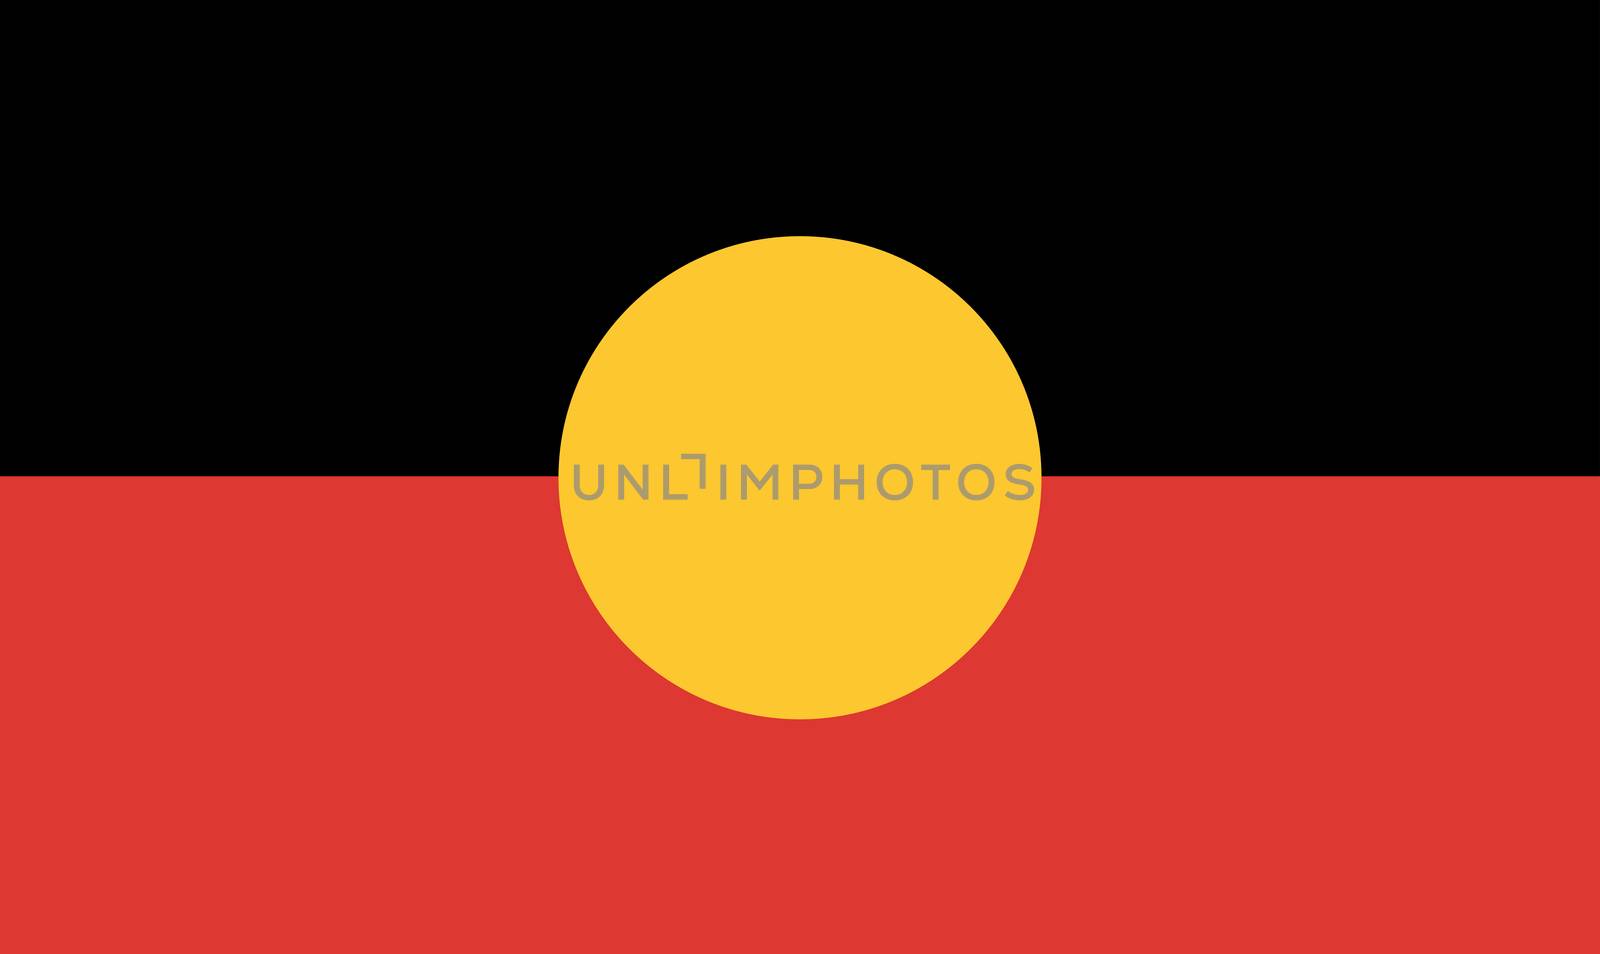 The flag of the Australian Aboriginal people